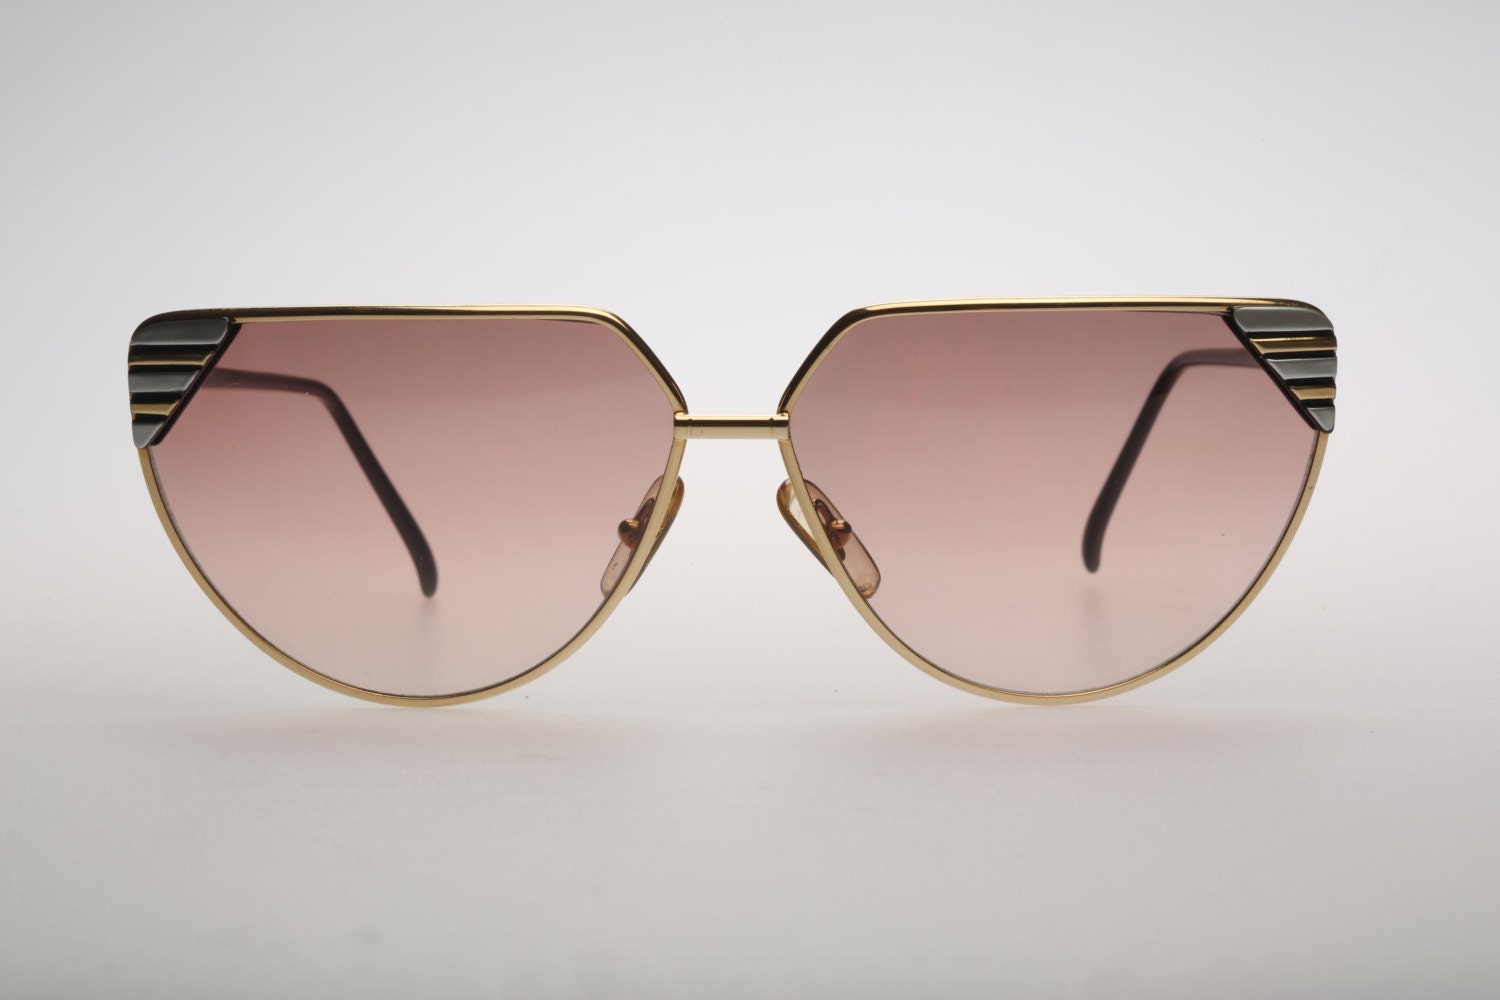 Helena Rubinstein HR 8 59 / Vintage sunglasses / NOS / 80s Rare cat eye ...